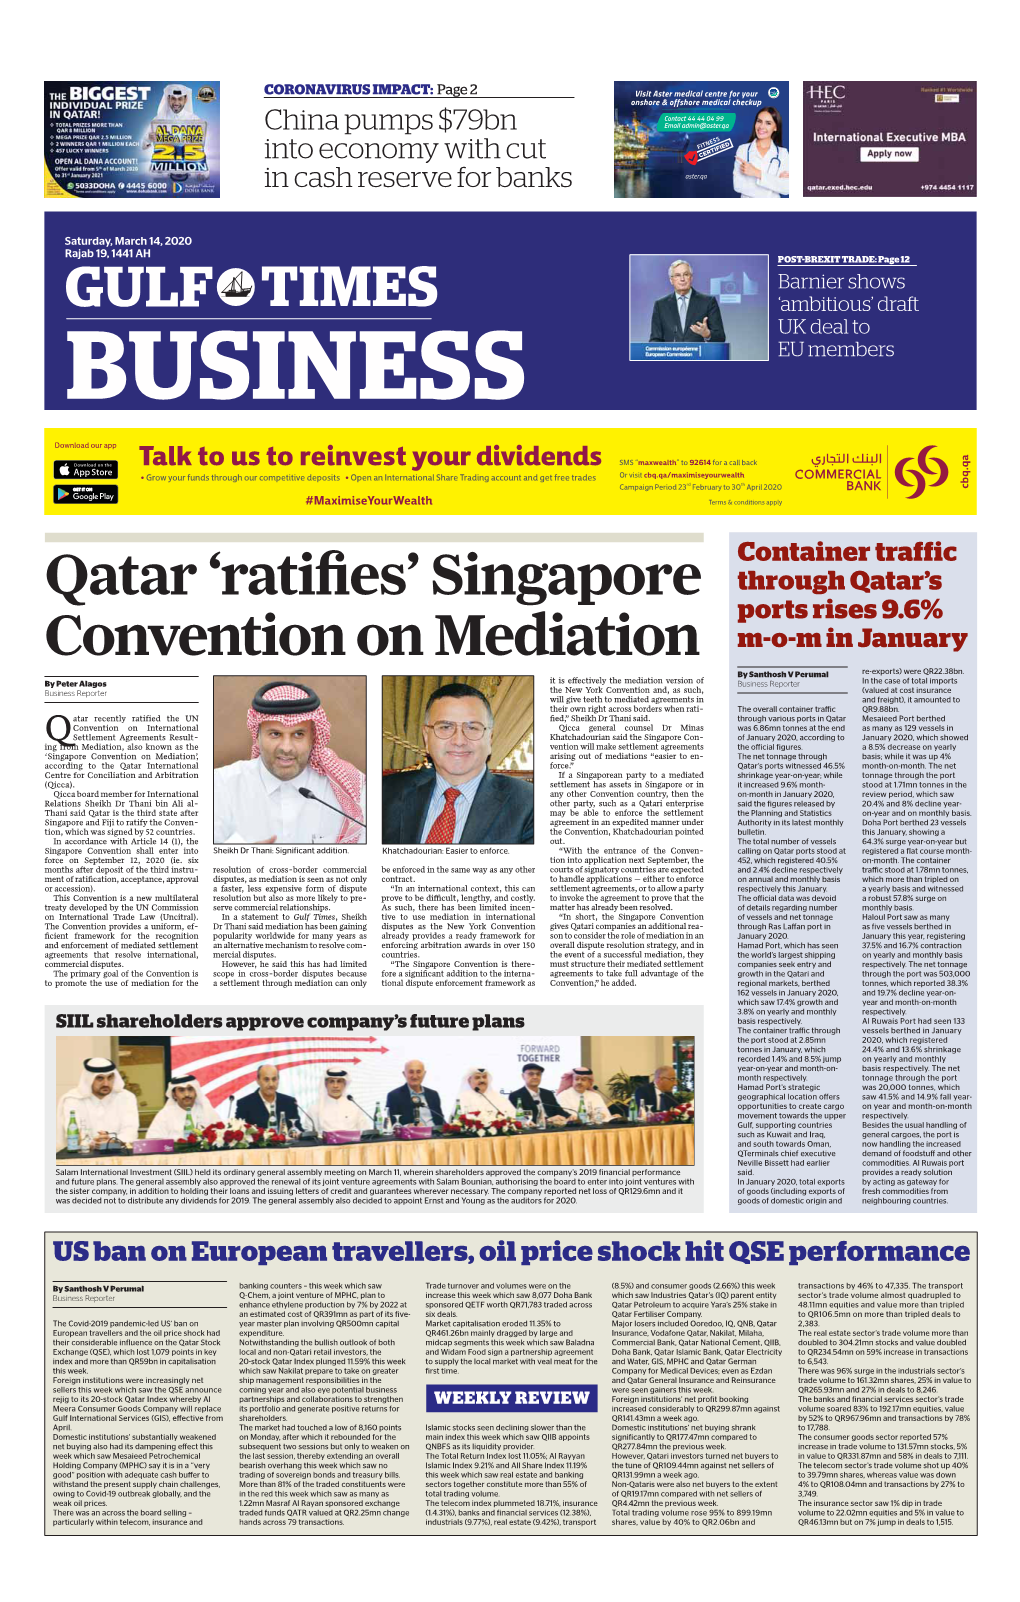 Qatar 'Ratifies' Singapore Convention on Mediation